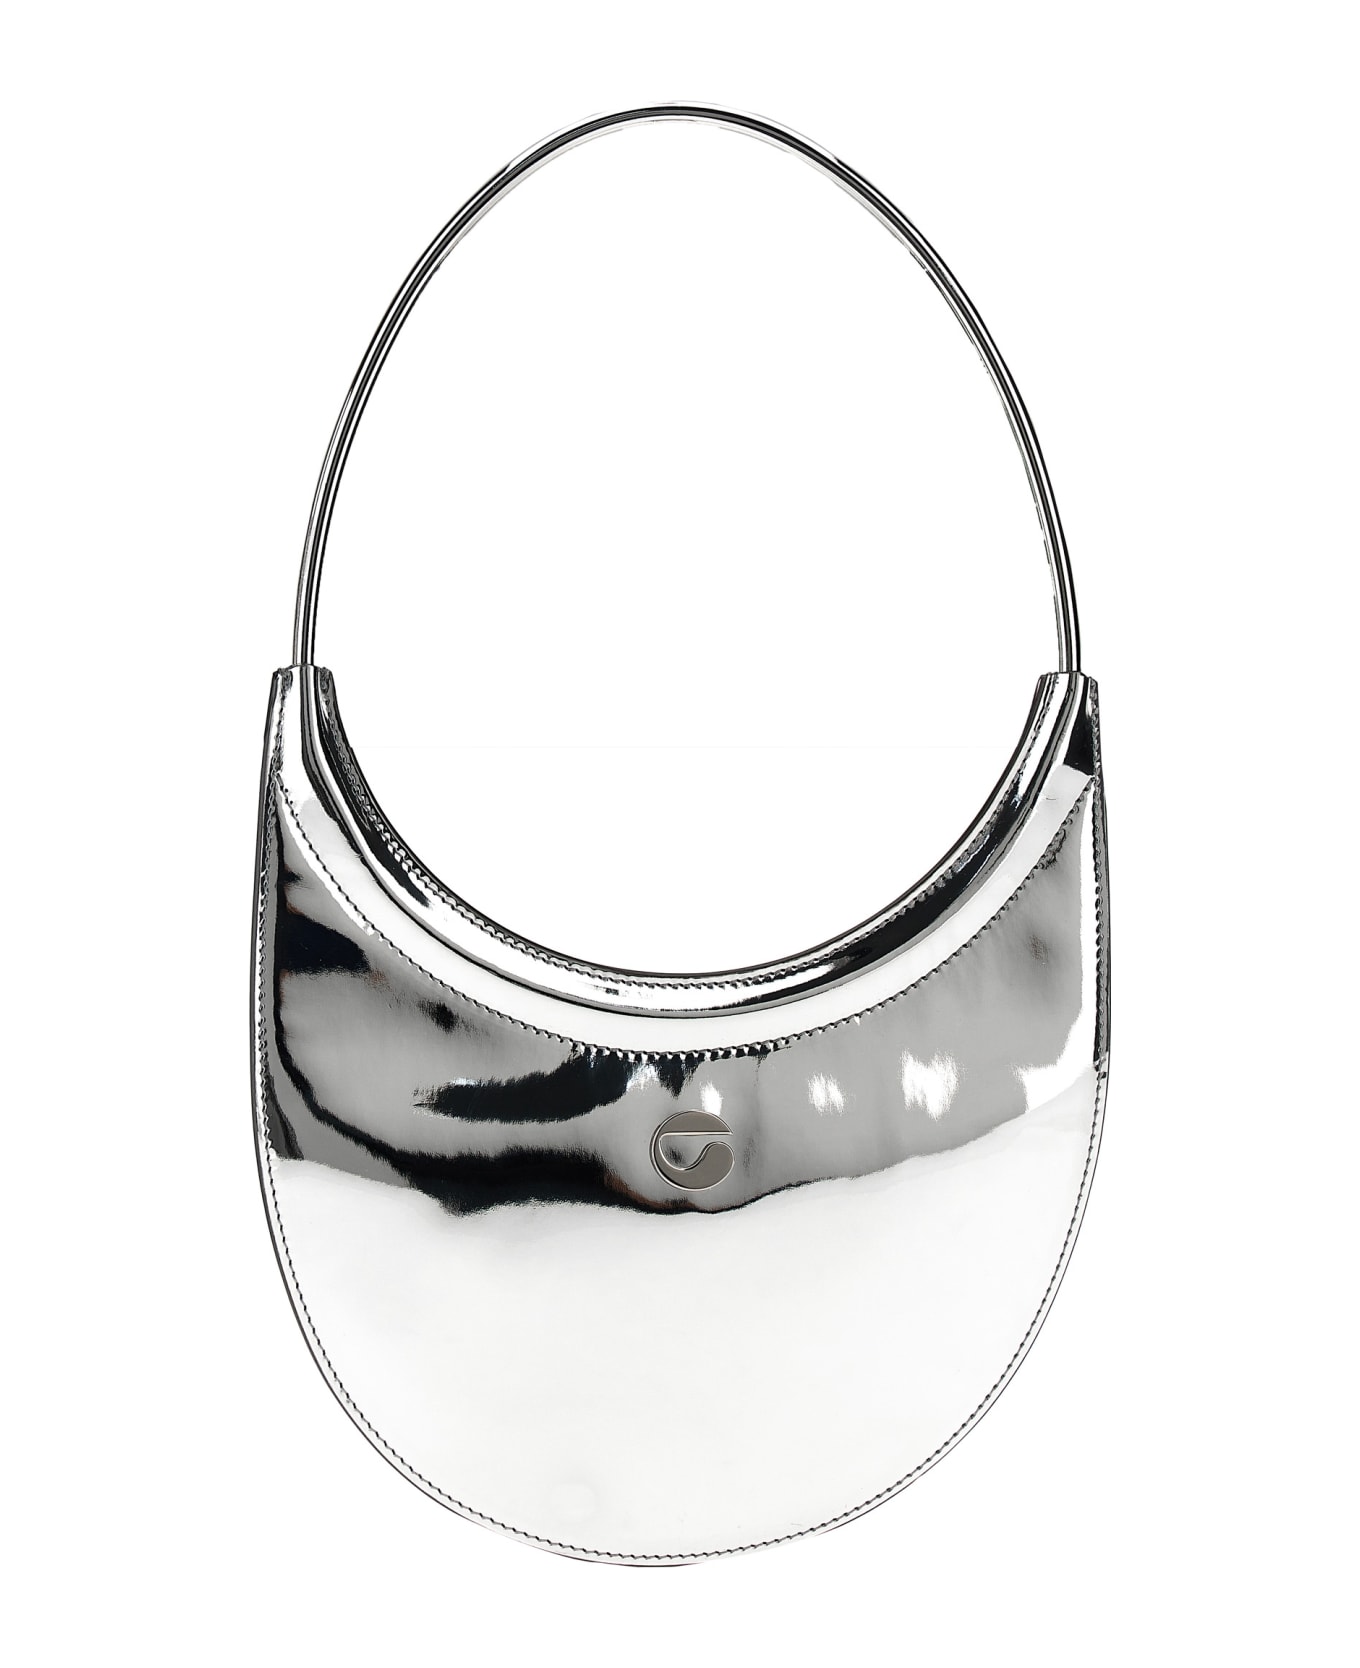 Coperni 'ring Swipe Bag' Handbag - Silver